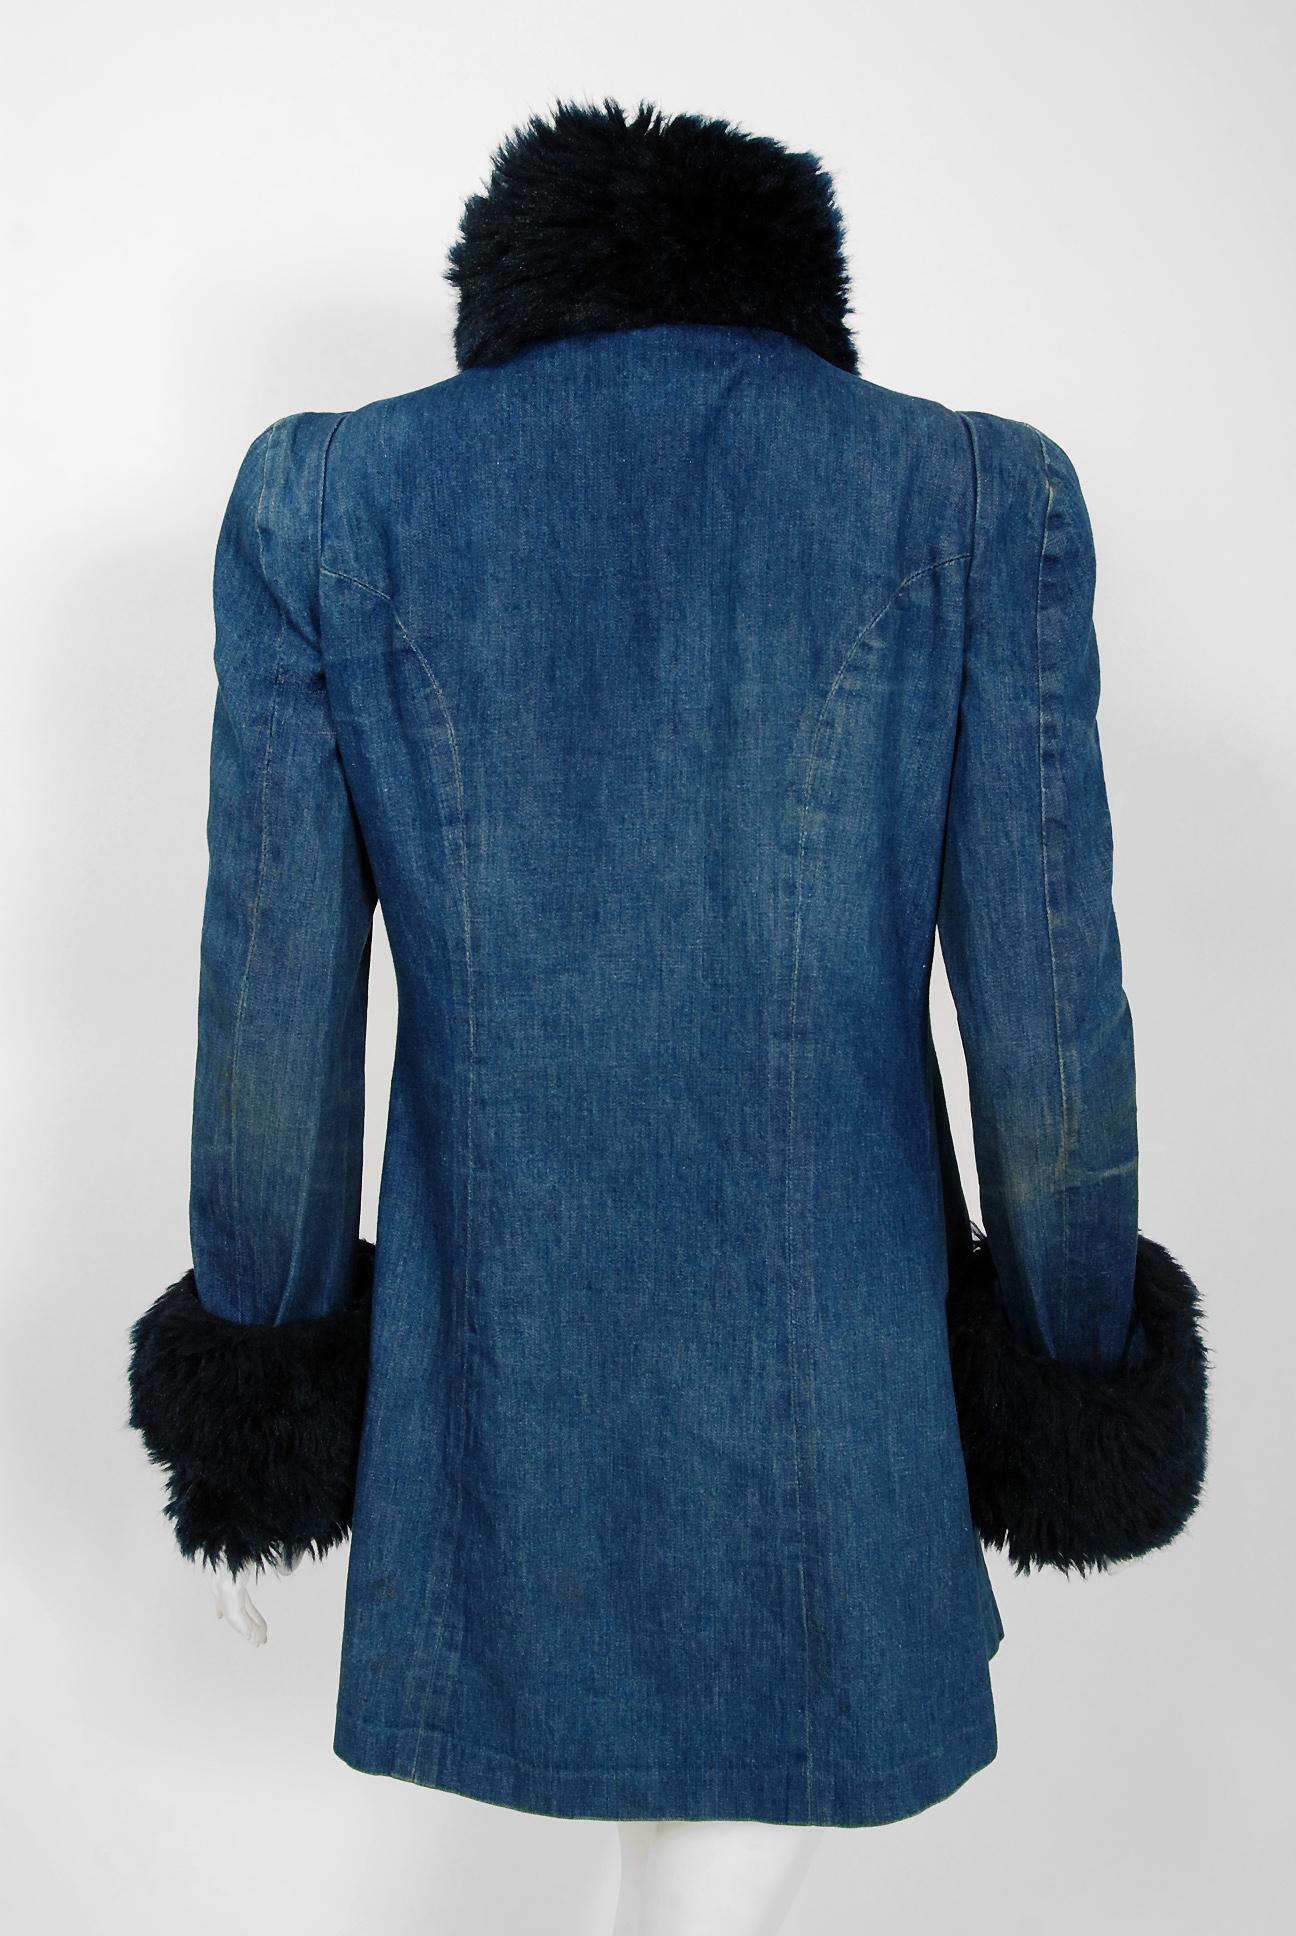 1975 Biba London Blue Denim and Faux-Fur Wide Cuff Sculpted Puff Shoulder Jacket 3